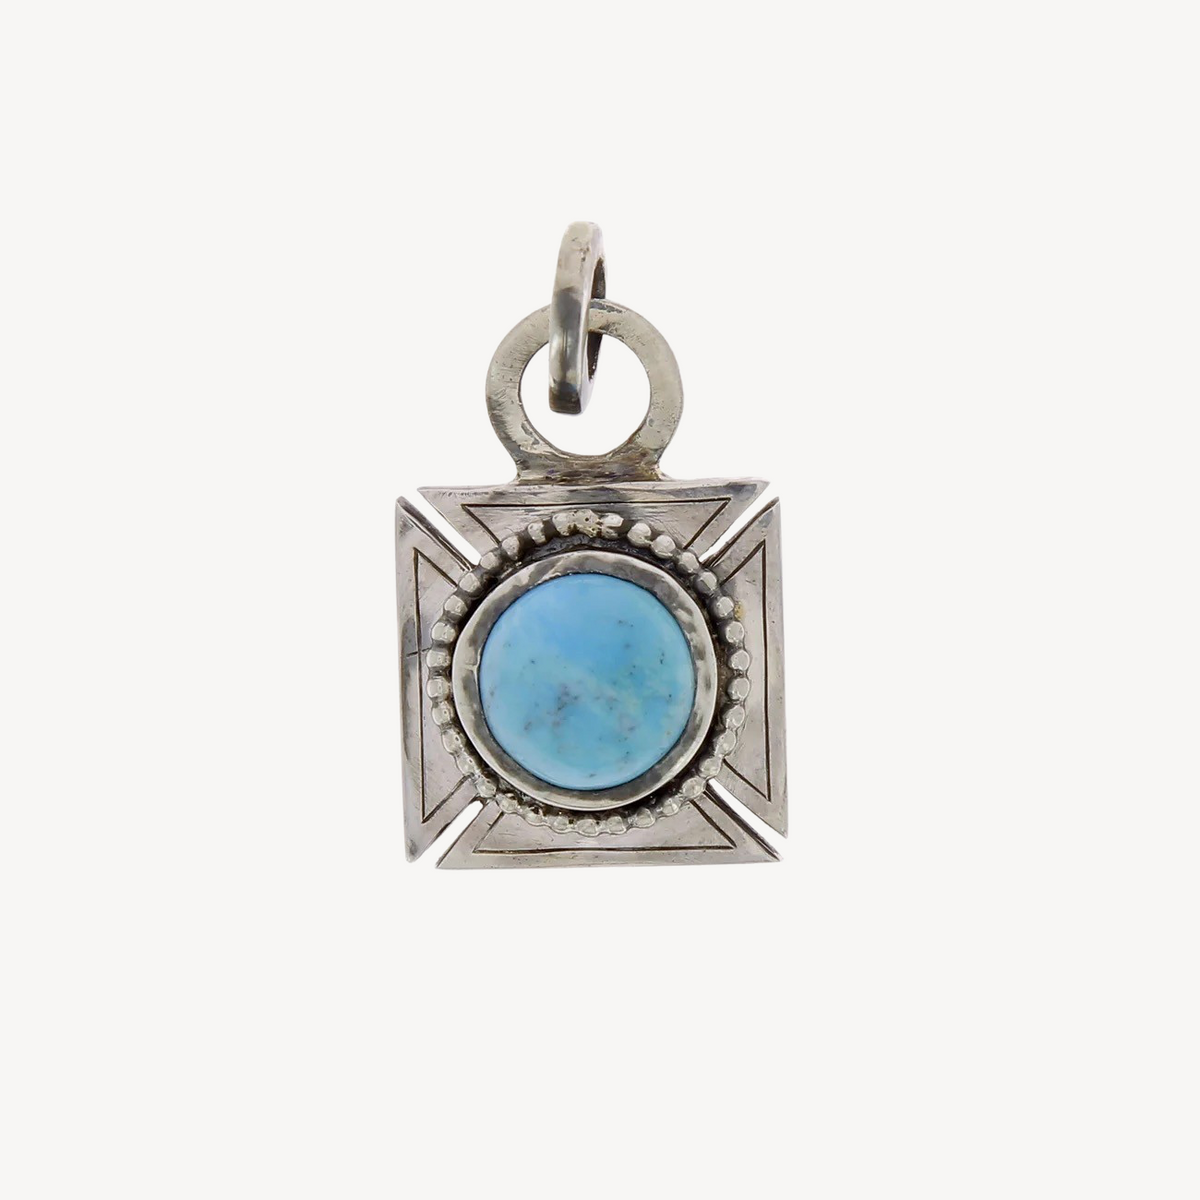 Kustome kulture pesos pendant with arizona turquoise